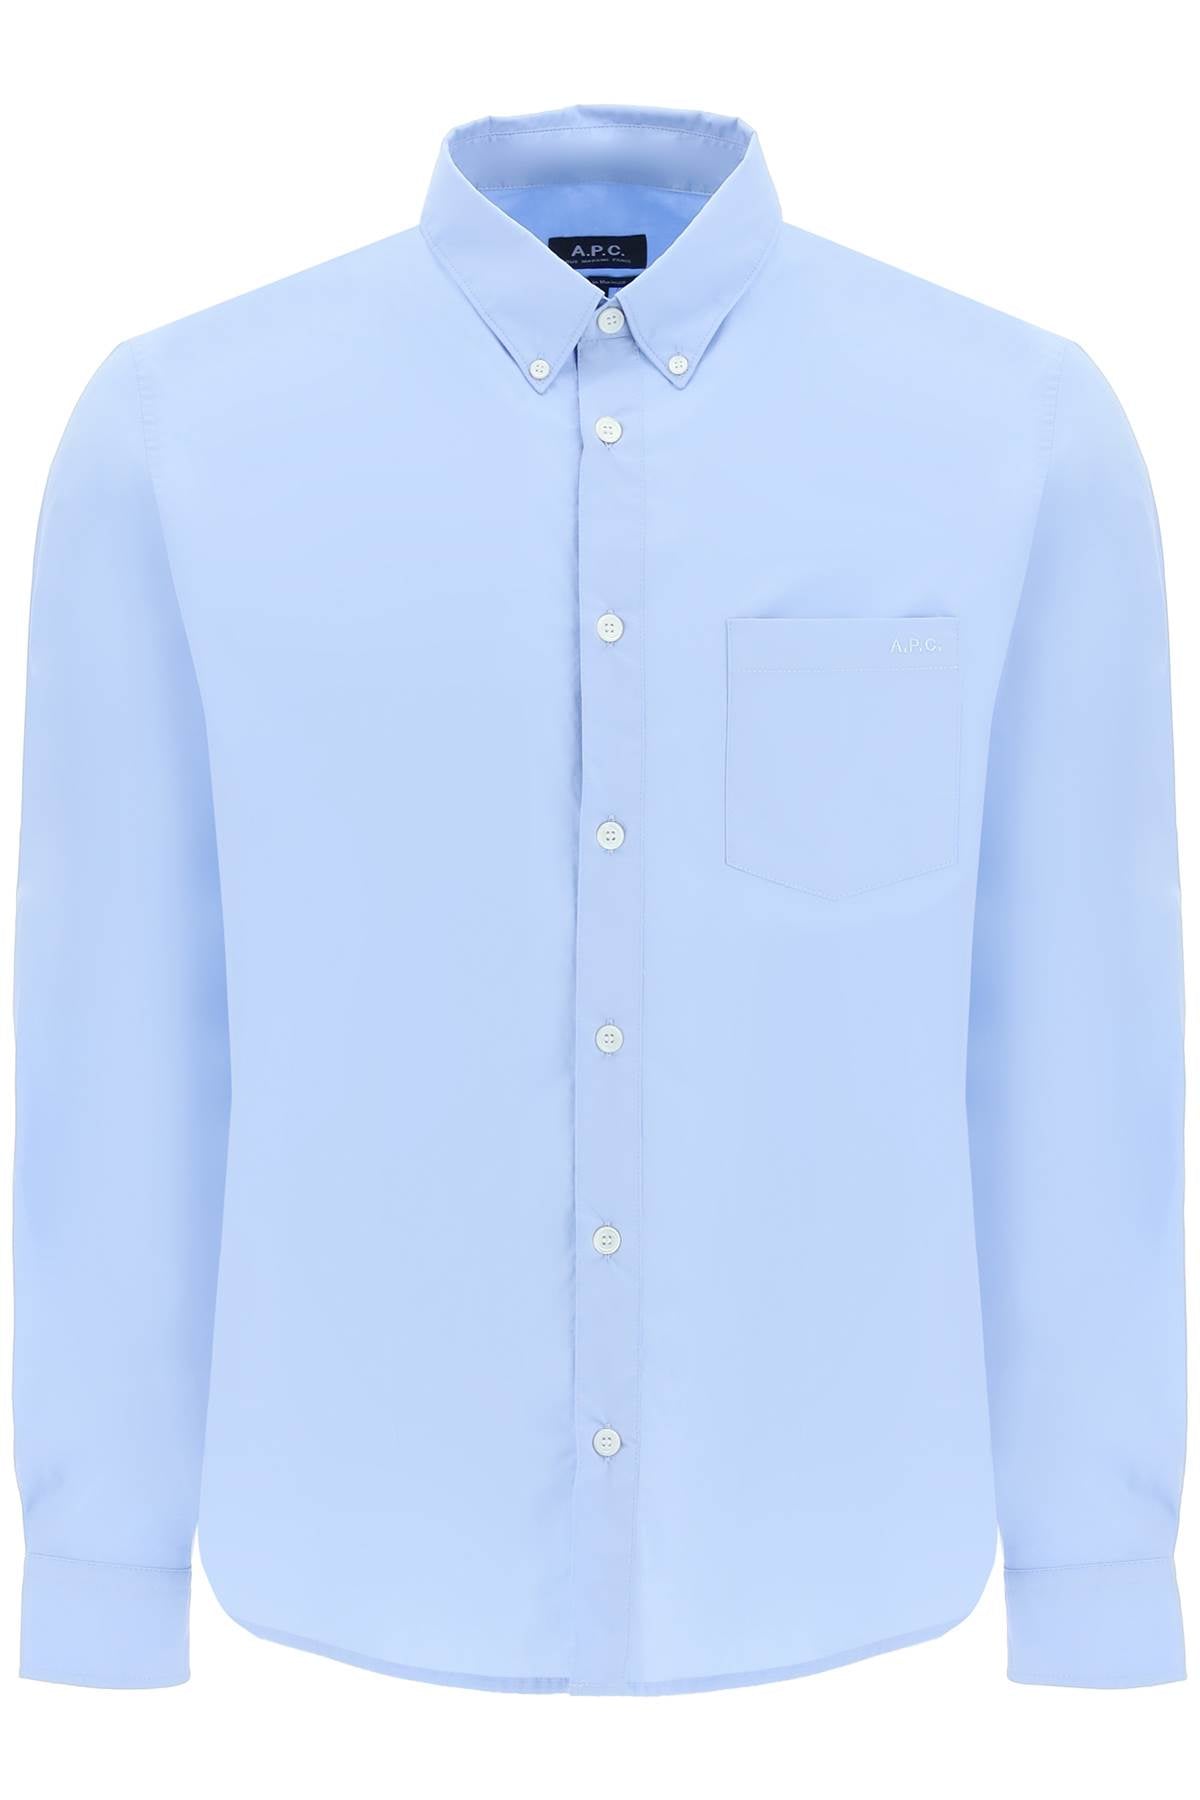 A.P.C. &#39;Edouard&#39; Shirt   Light Blue